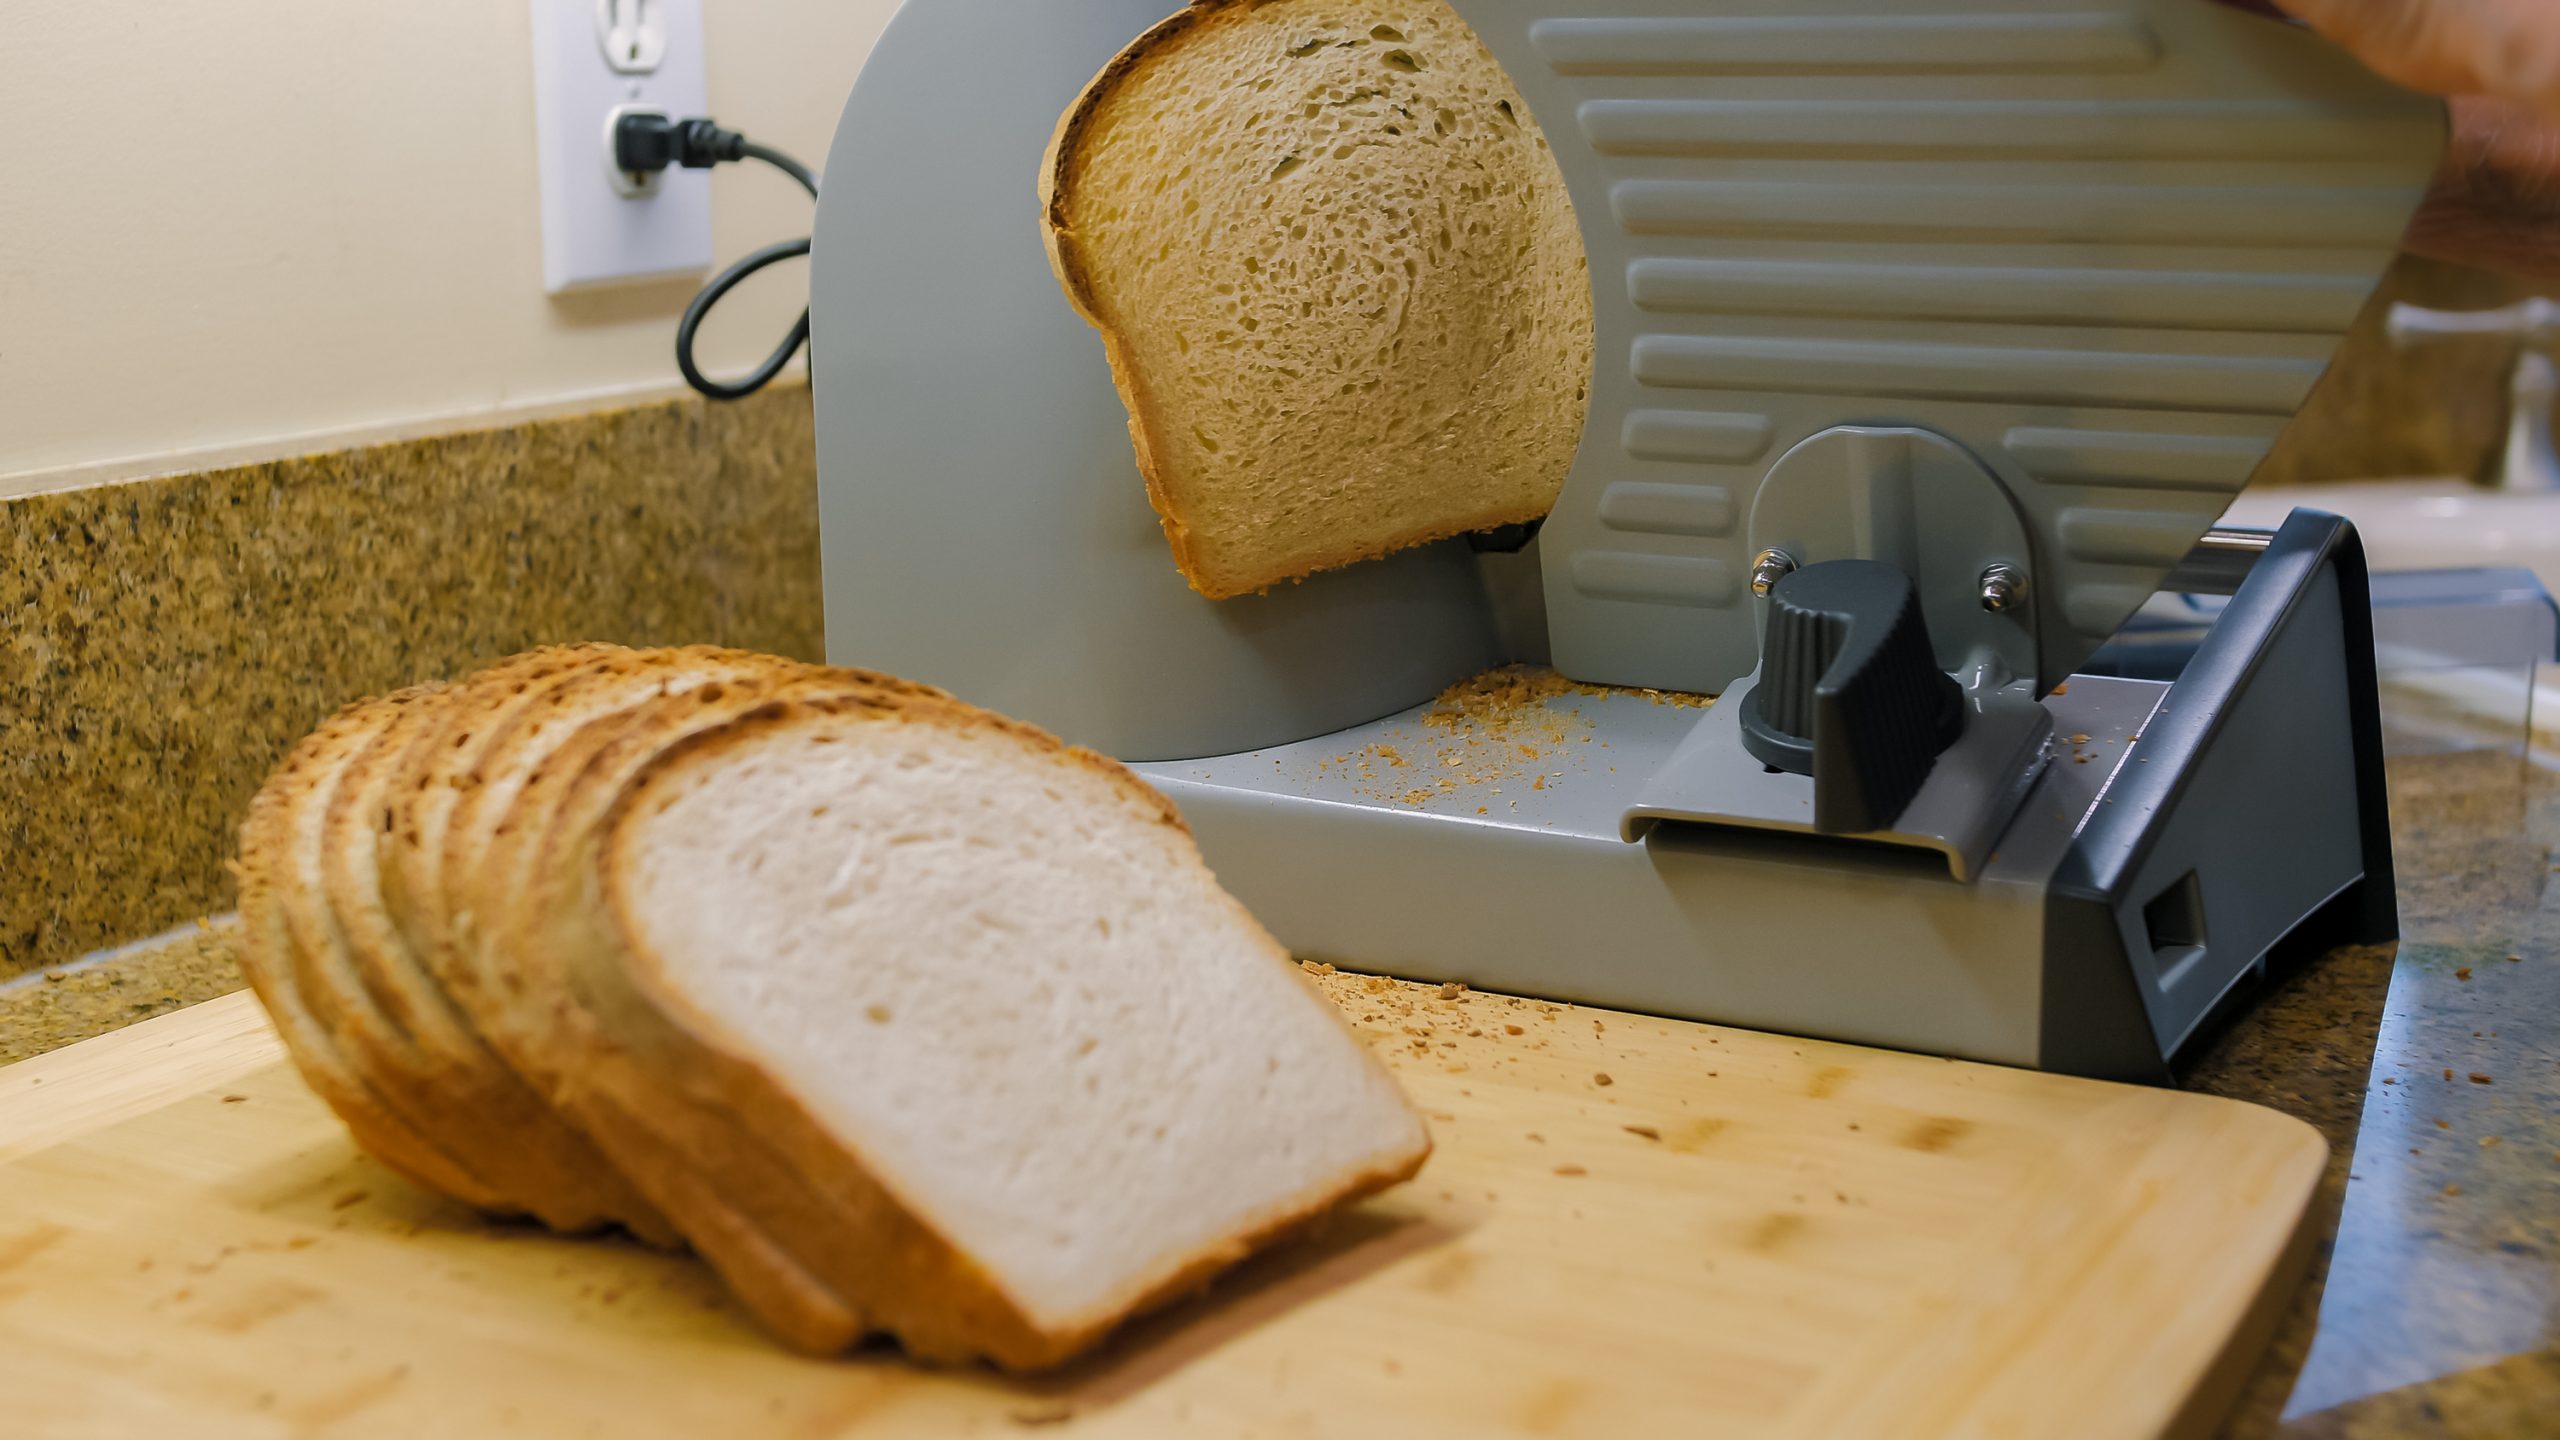 https://www.dontwasteyourmoney.com/wp-content/uploads/2021/11/best-bread-slicer-scaled.jpeg